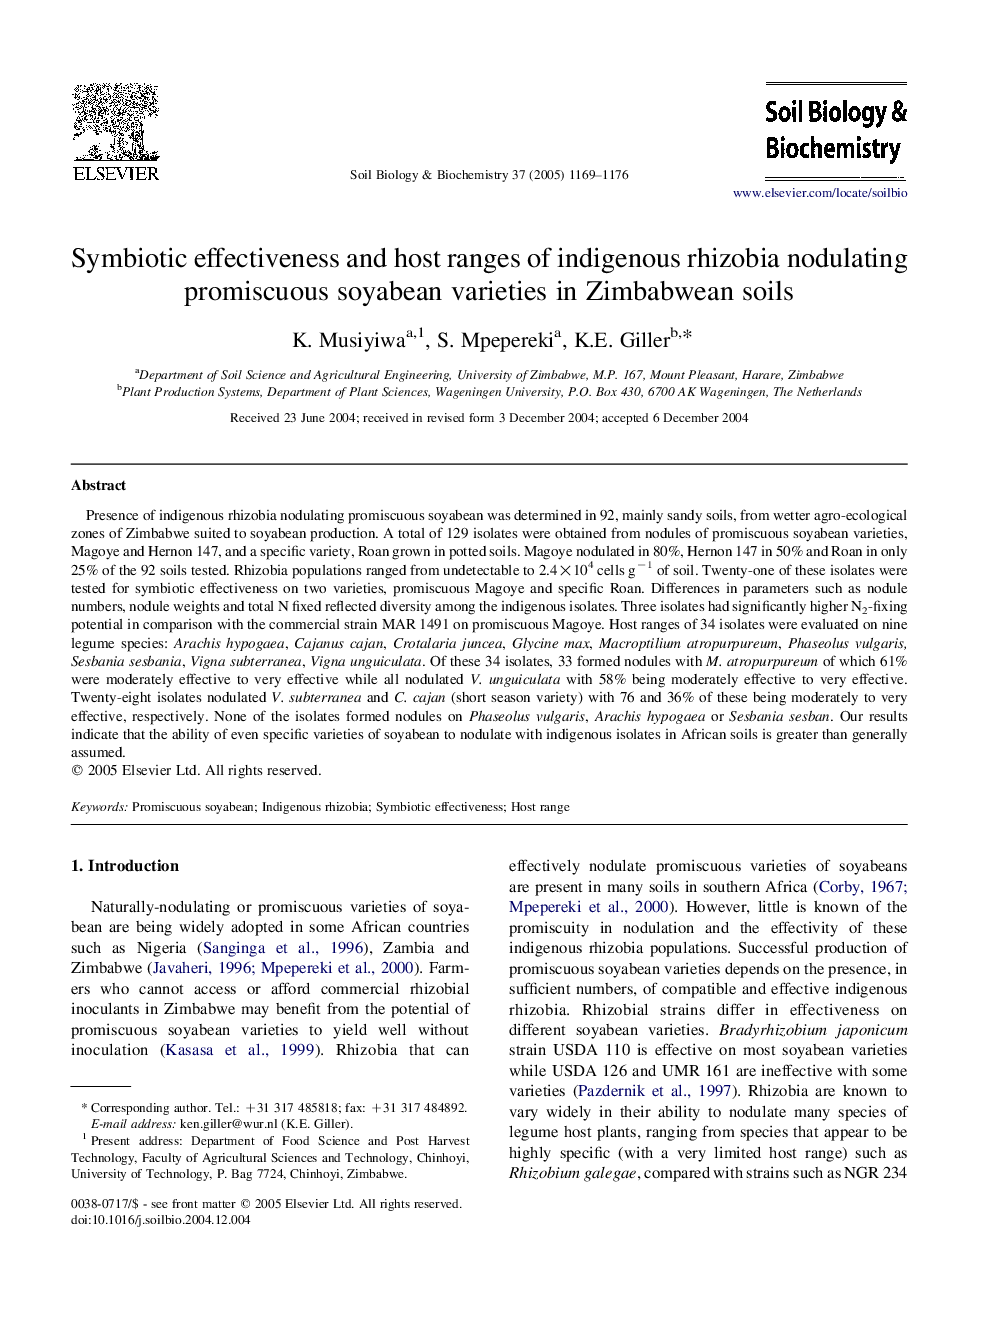 Symbiotic effectiveness and host ranges of indigenous rhizobia nodulating promiscuous soyabean varieties in Zimbabwean soils